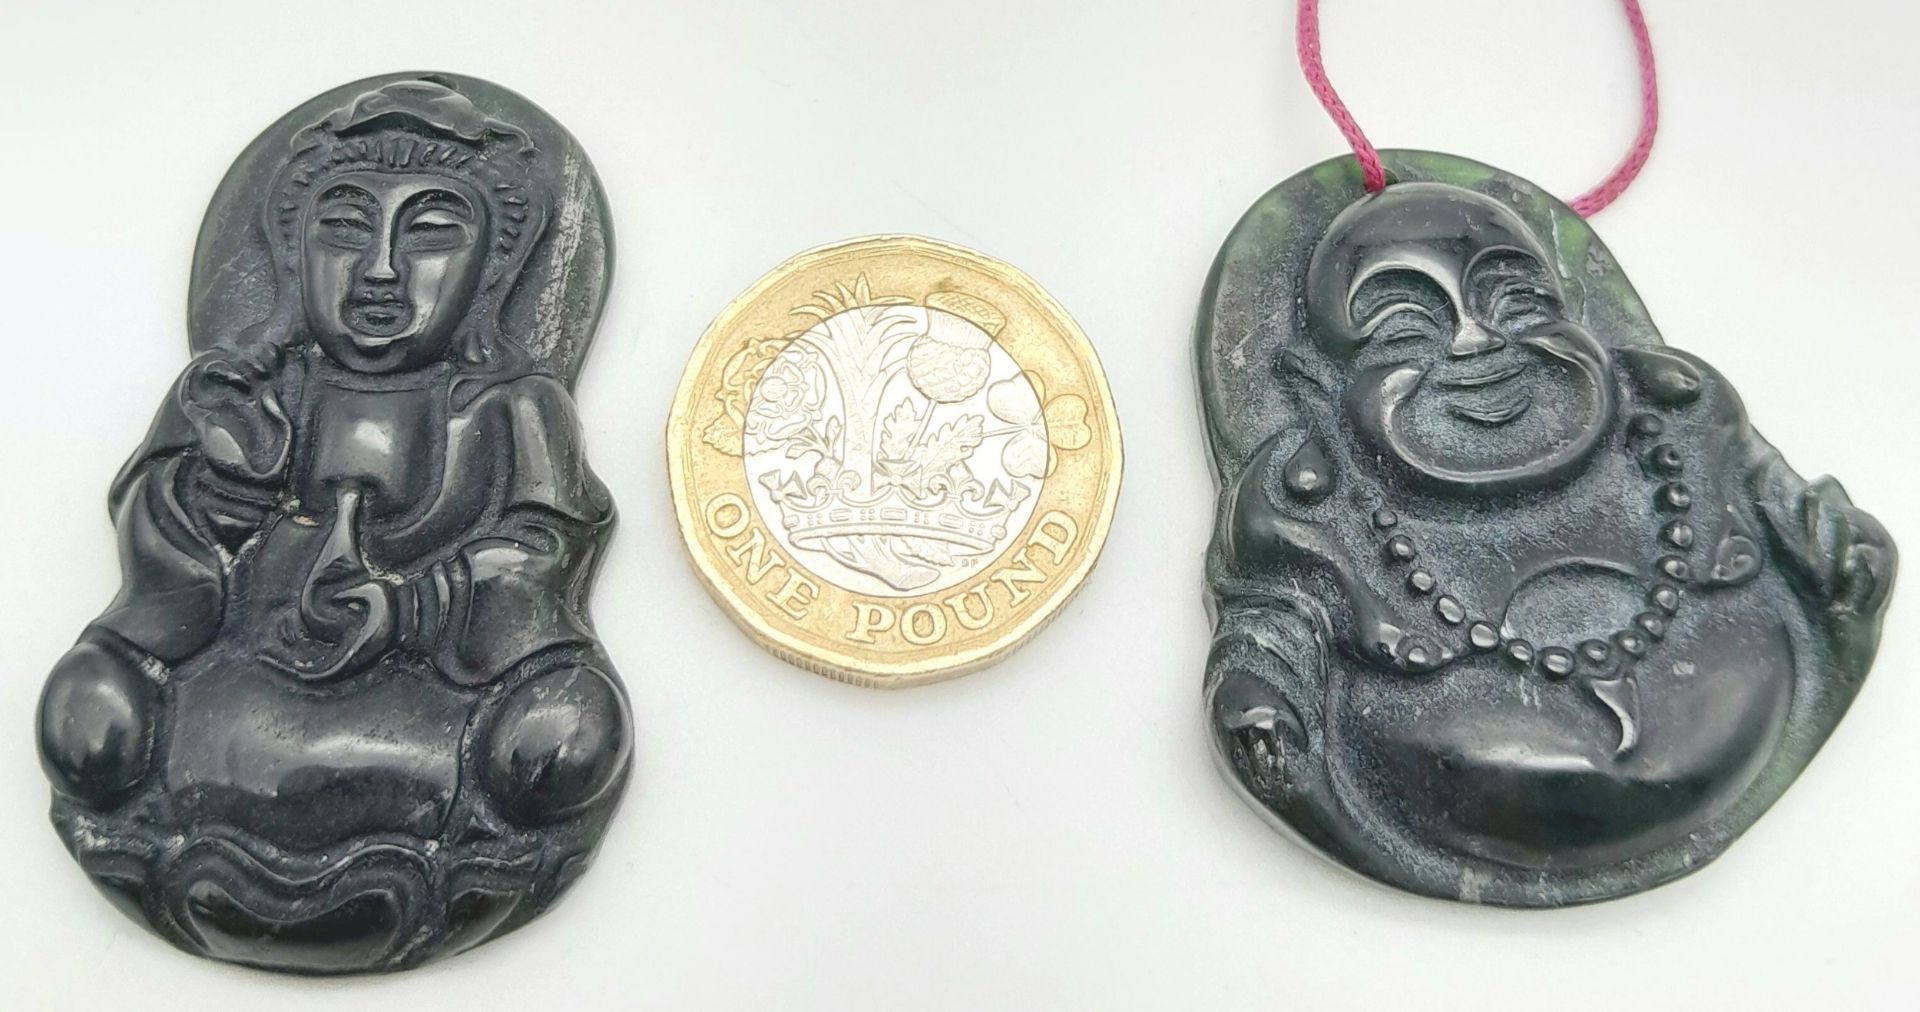 2 x Black Onyx Buddha Pendants - Buddha and Laughing Buddha. 4.5cm and 4cm length. 25g total weight. - Image 4 of 4